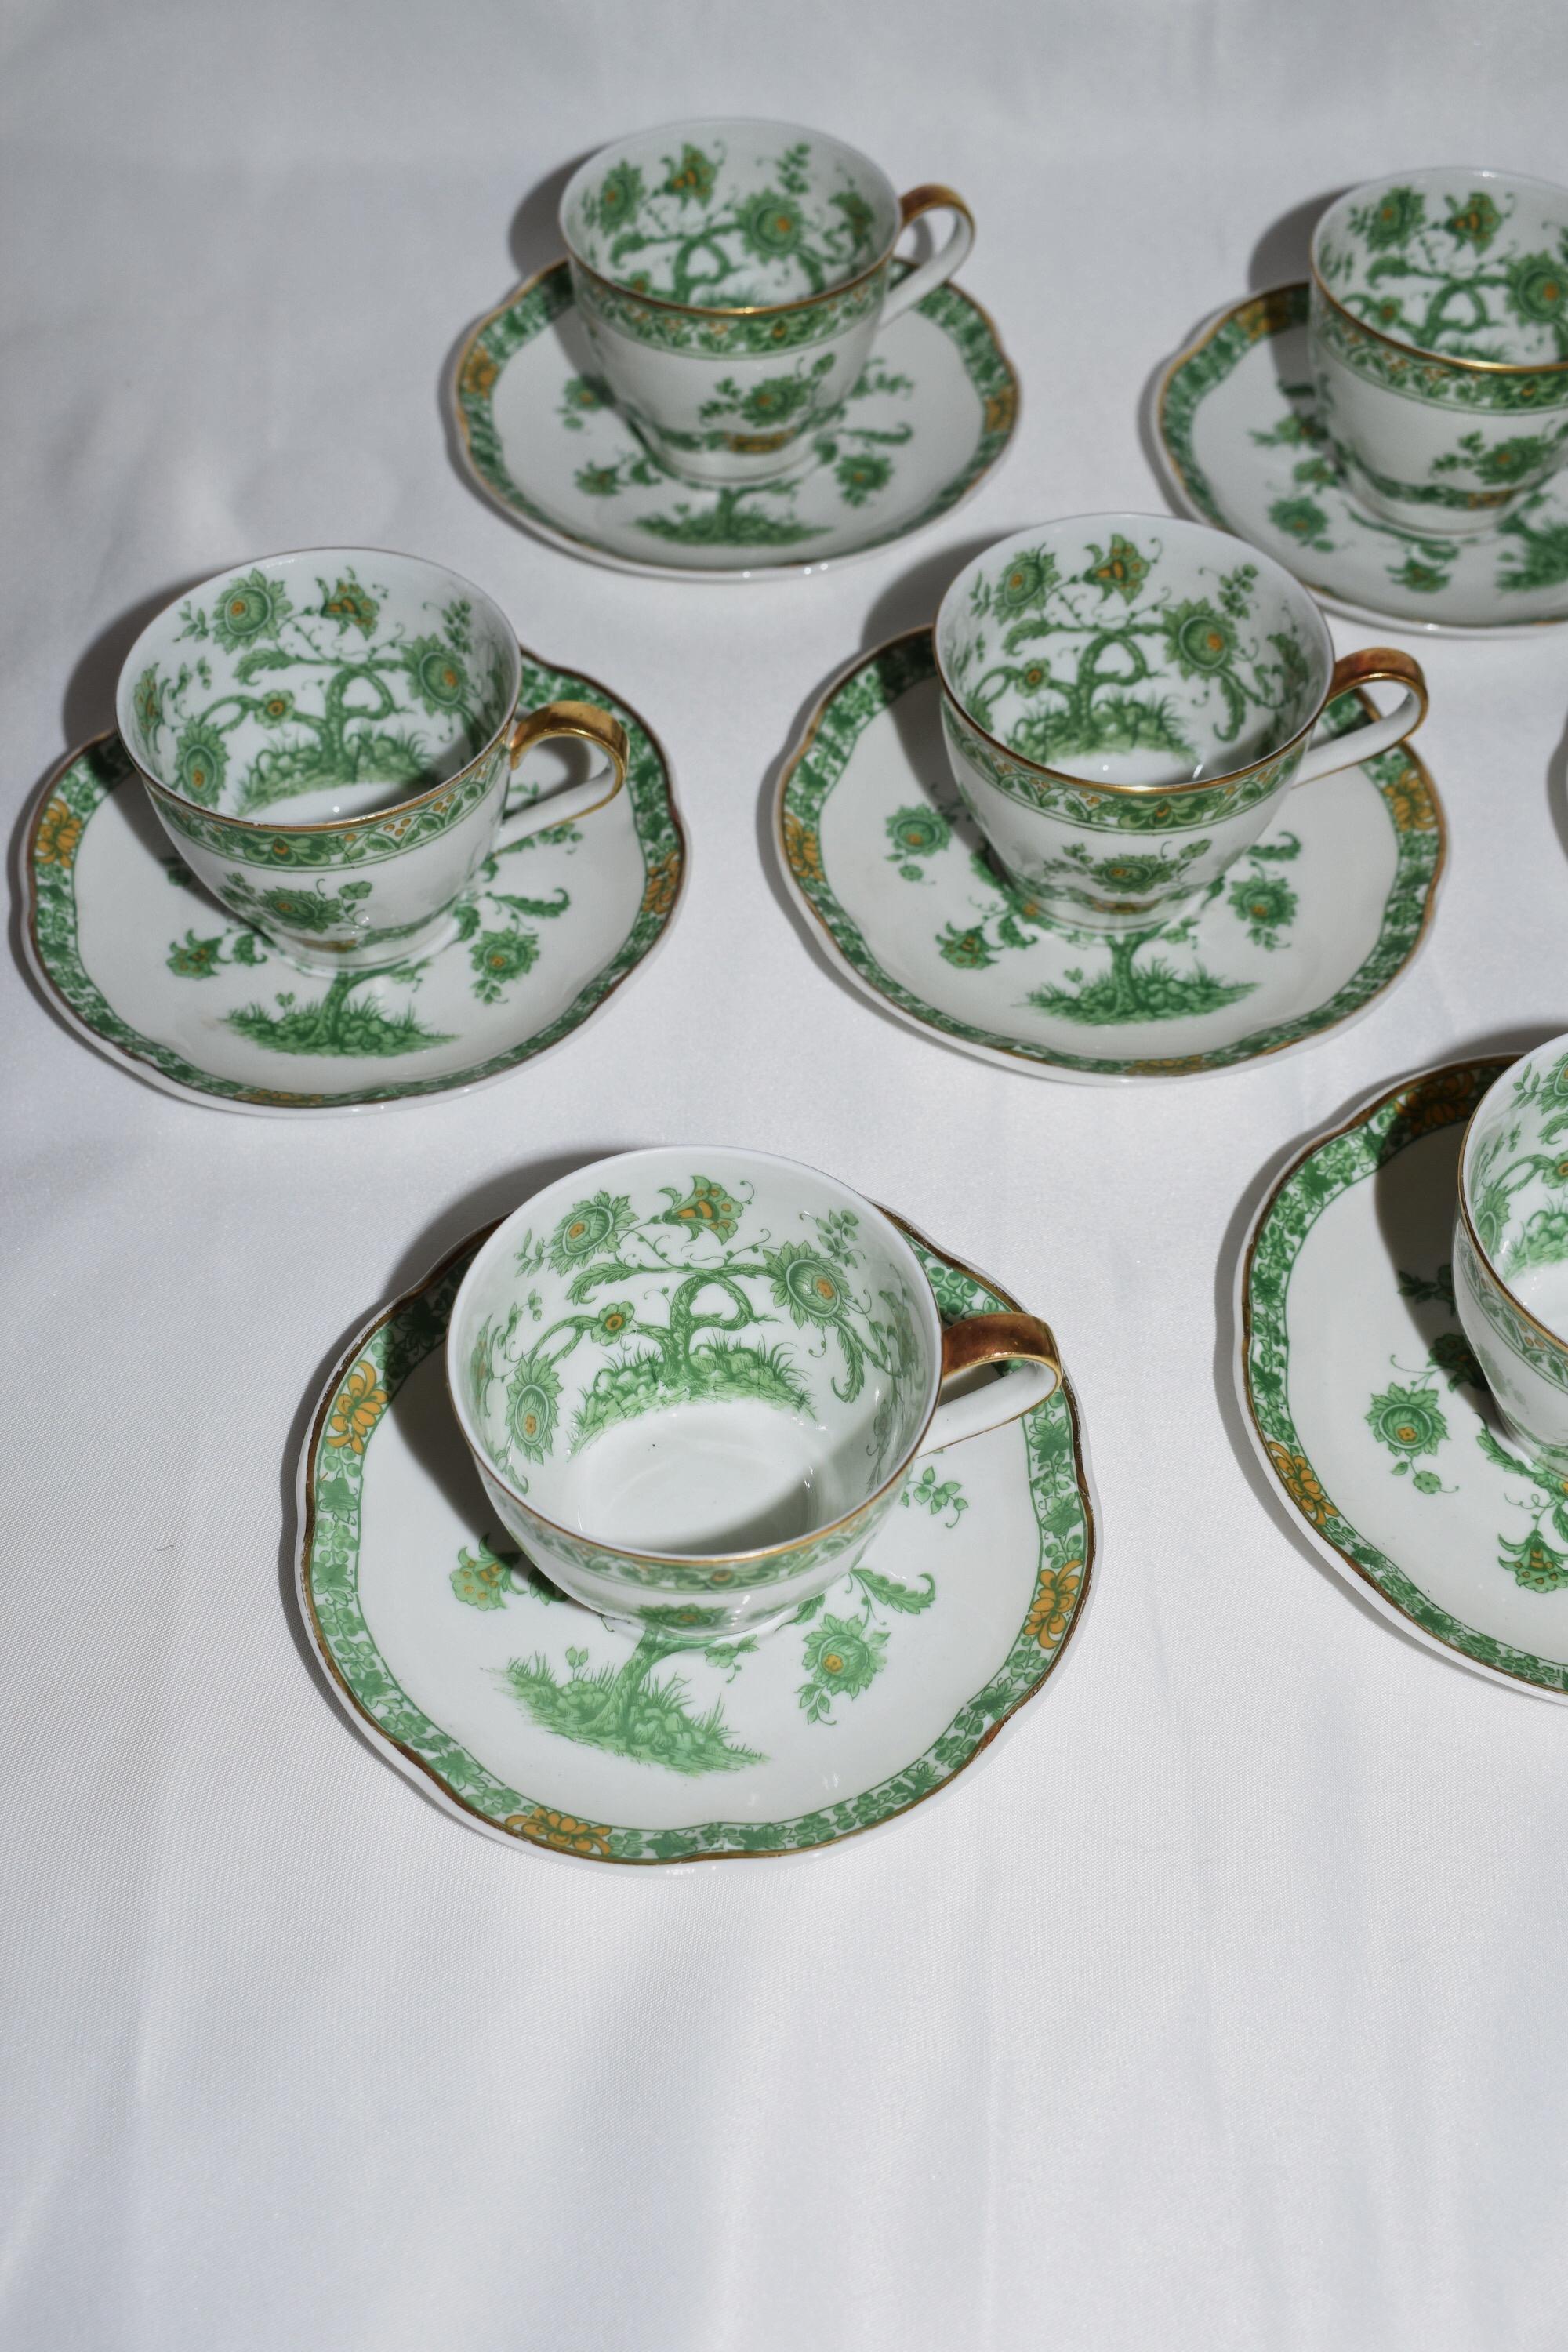 Suite of 10 Havilland Limoges Porcelain Cashmere Green Cup and Saucer 3